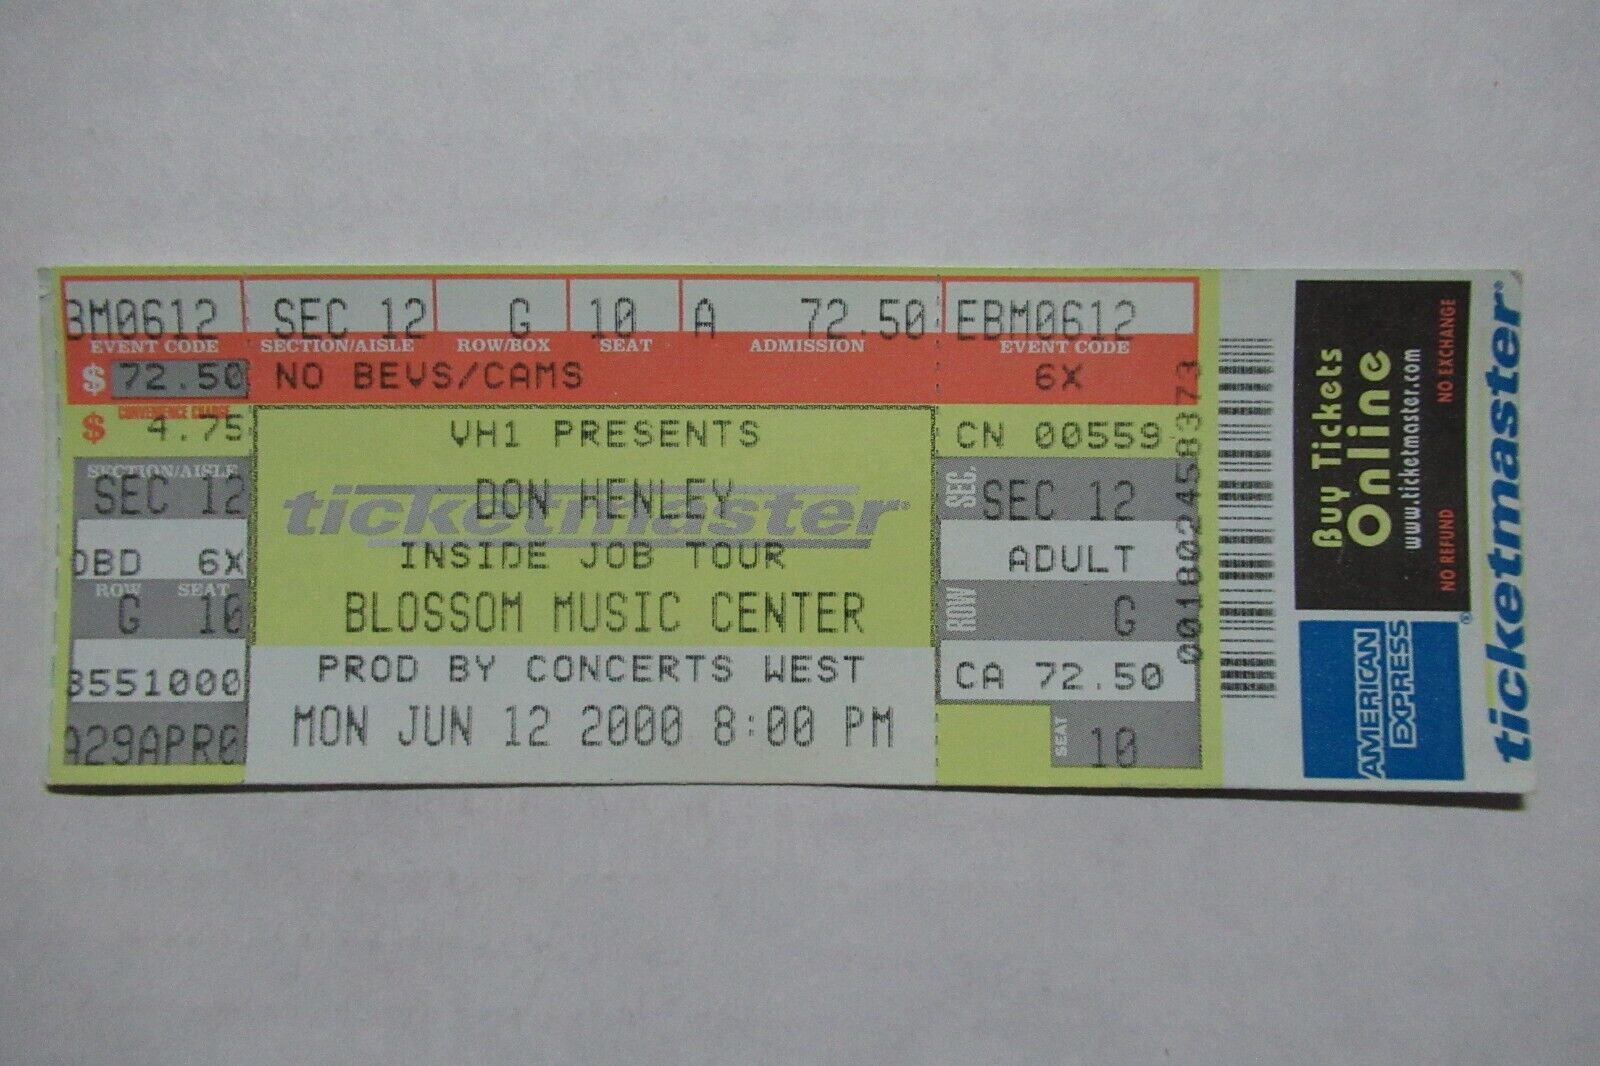 DON HENLEY CONCERT INSIDE JOB TOUR 6/12/2000 FULL TICKET BLOSSOM CUYAHOGA FALLS